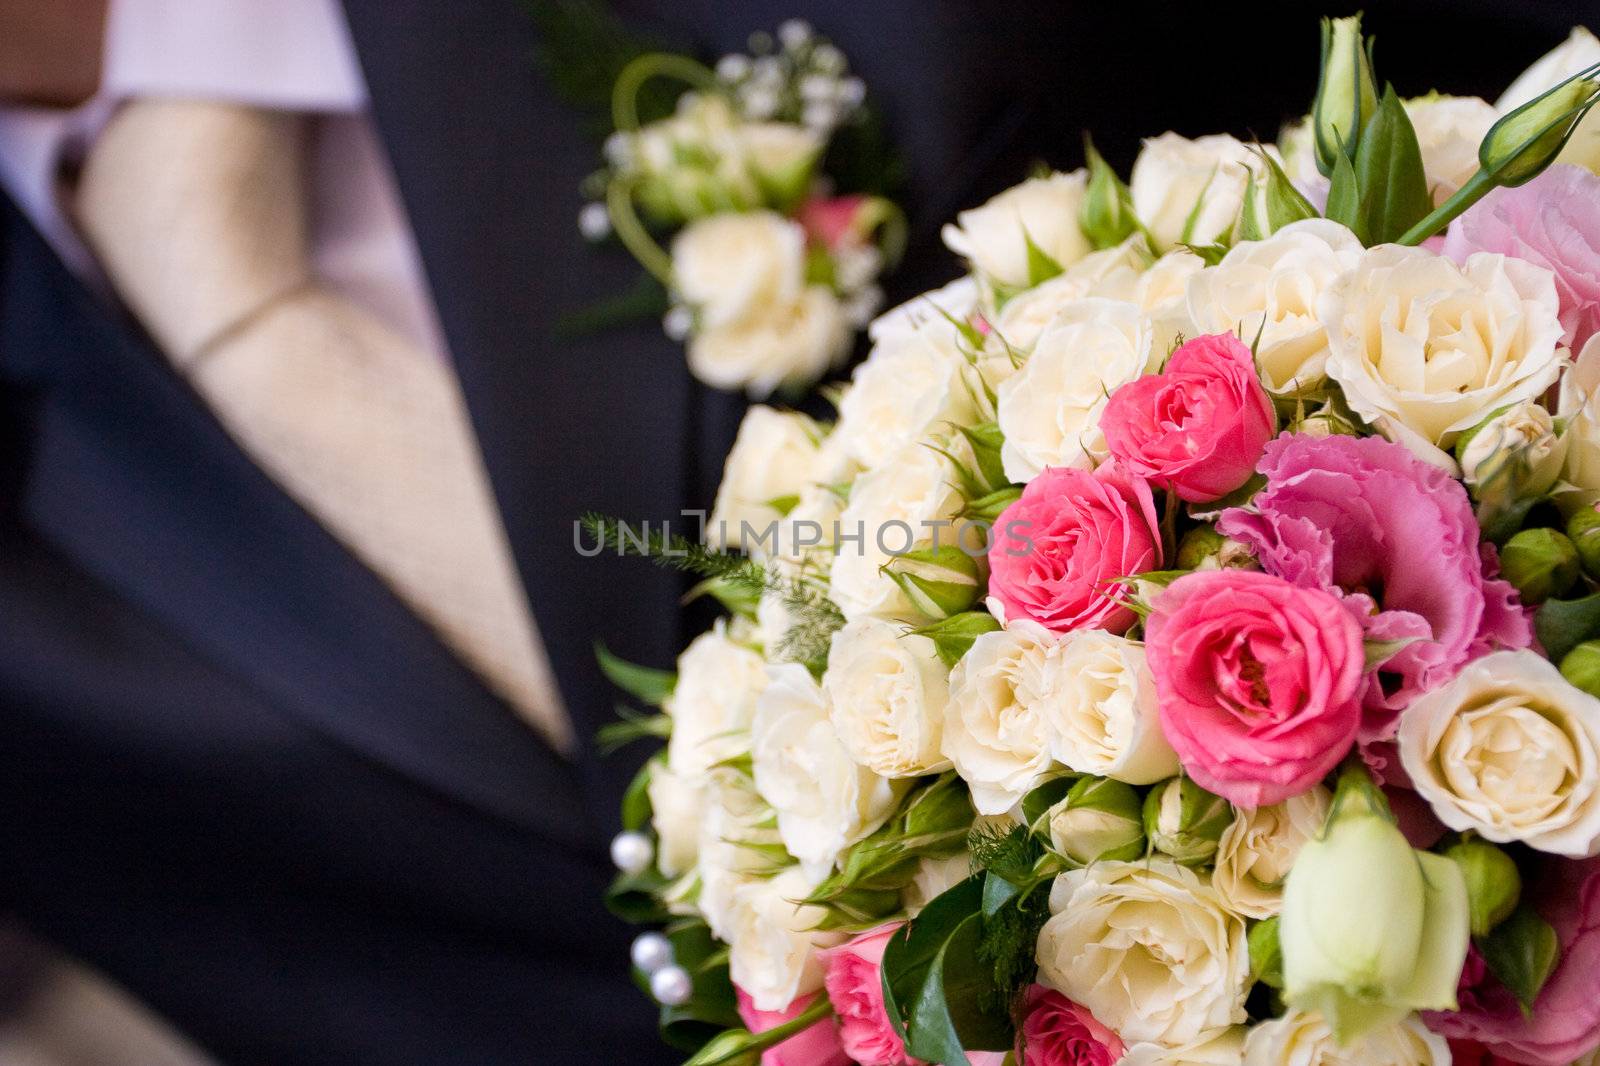 groom, tie and flower bouquet